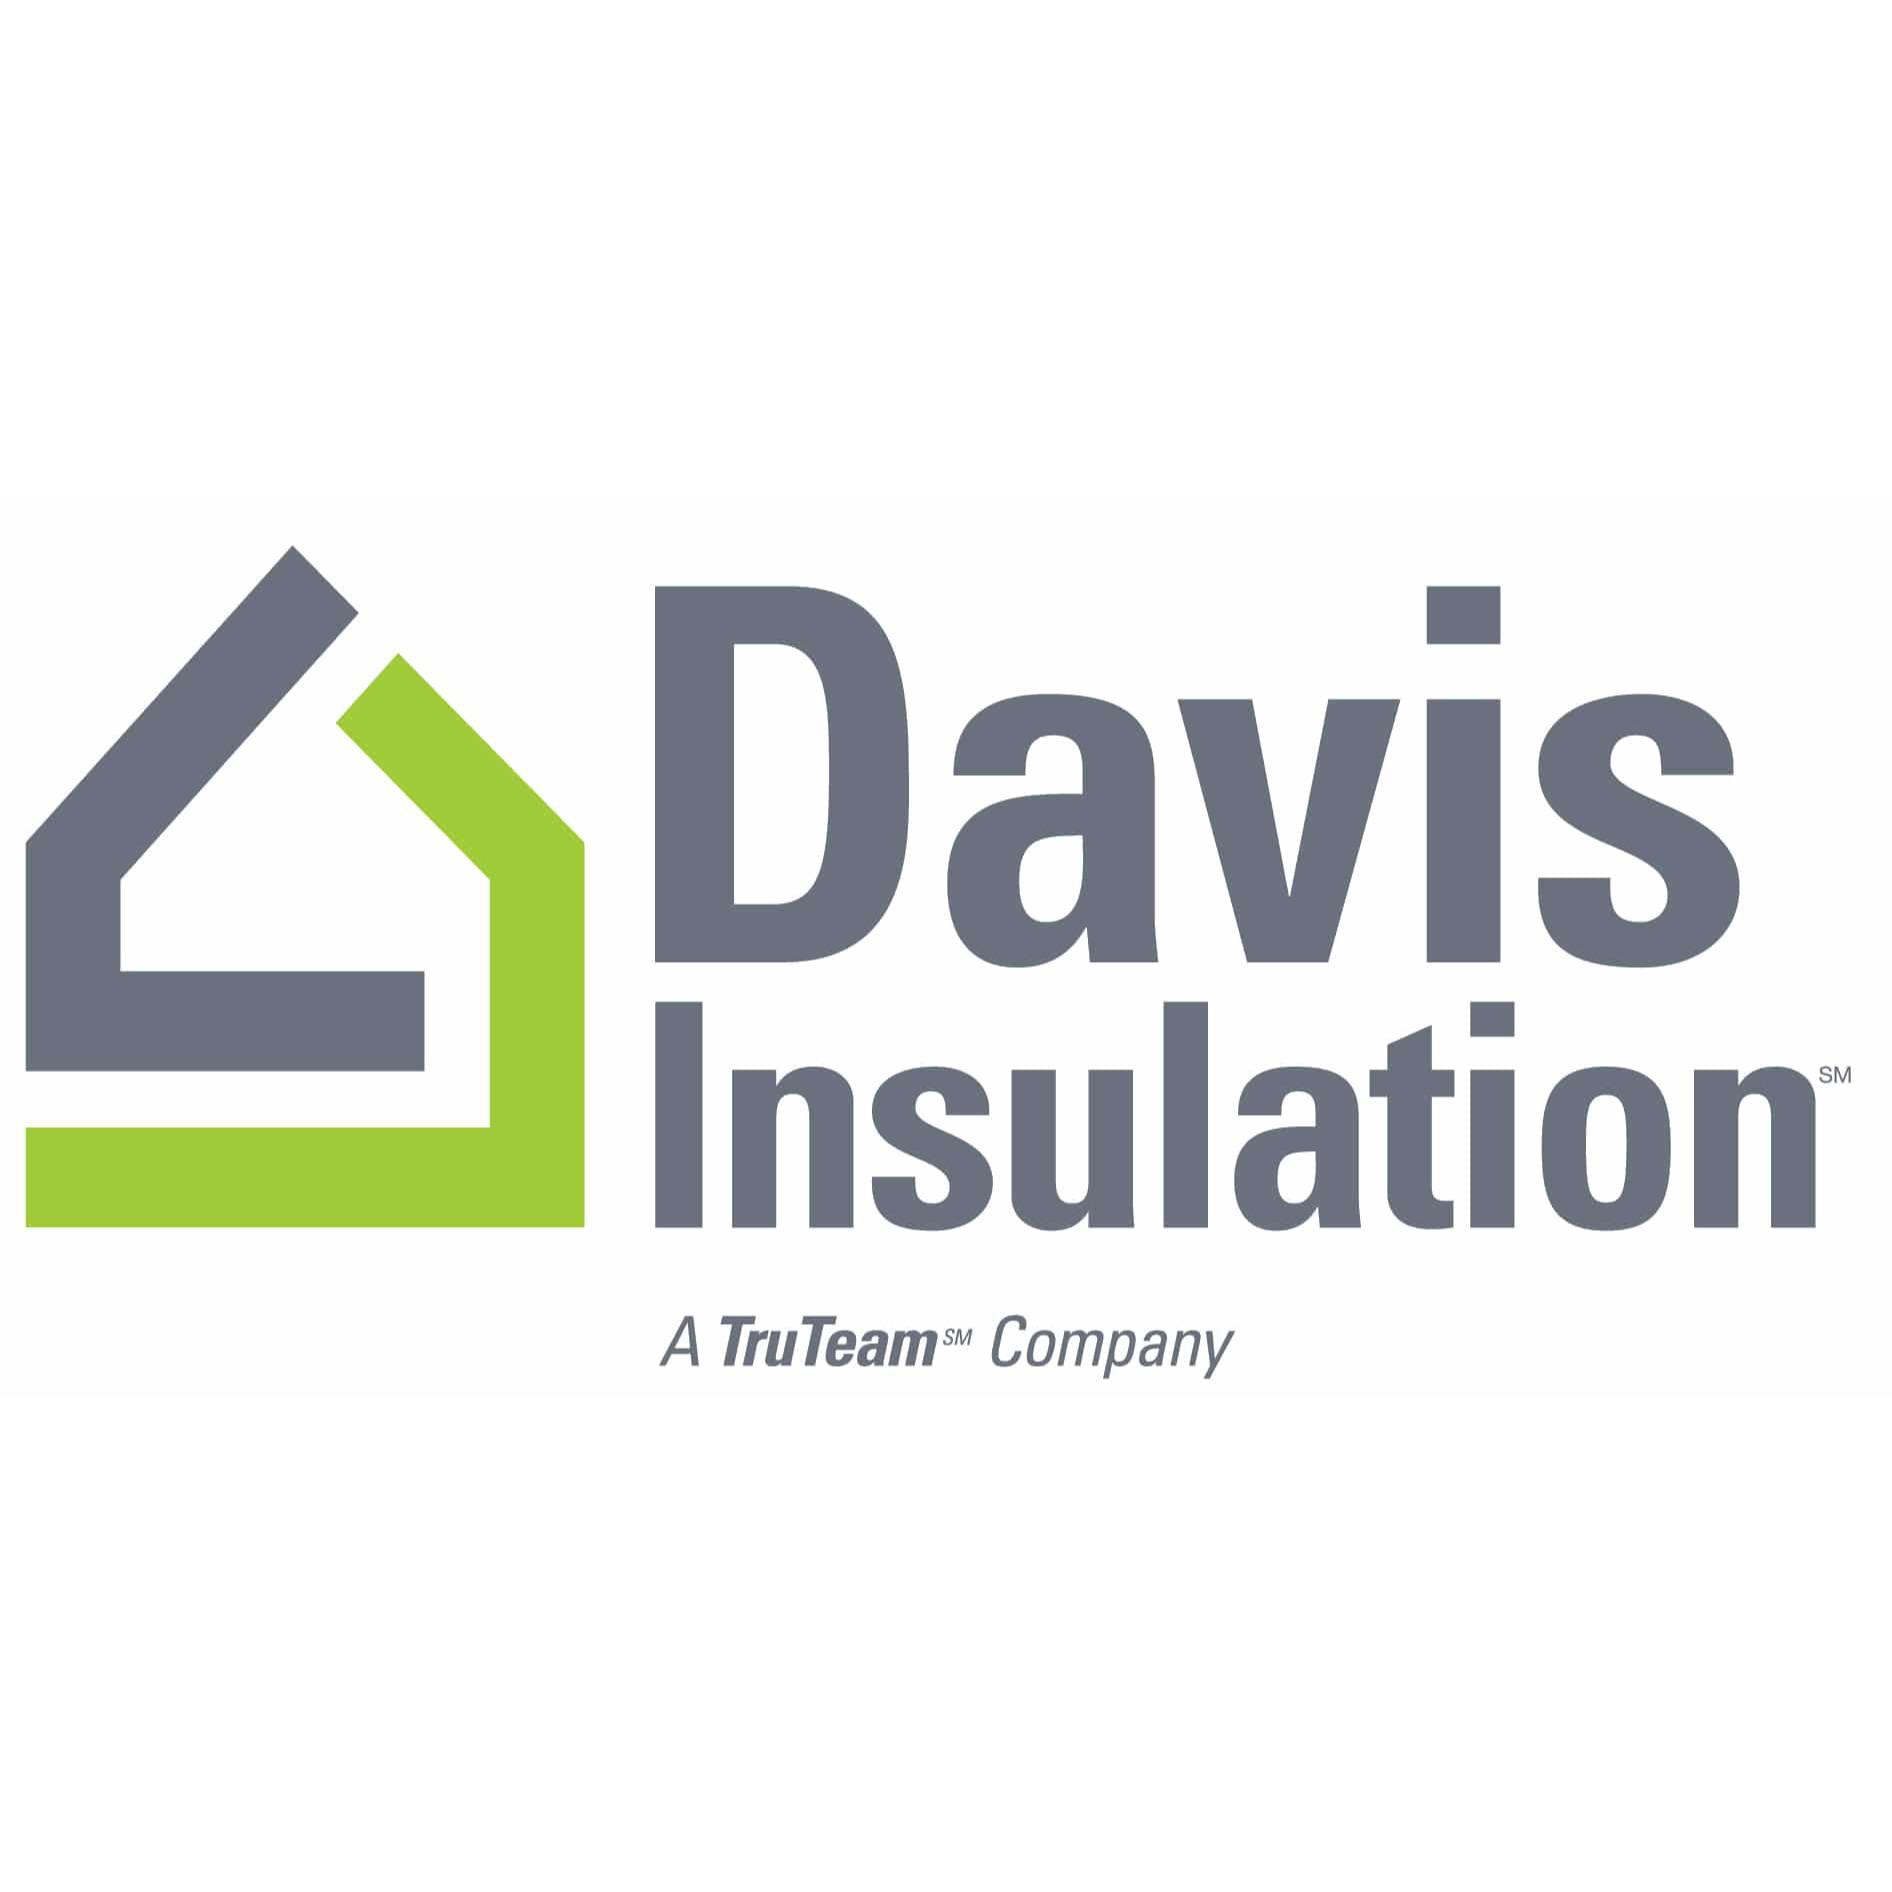 Davis Insulation